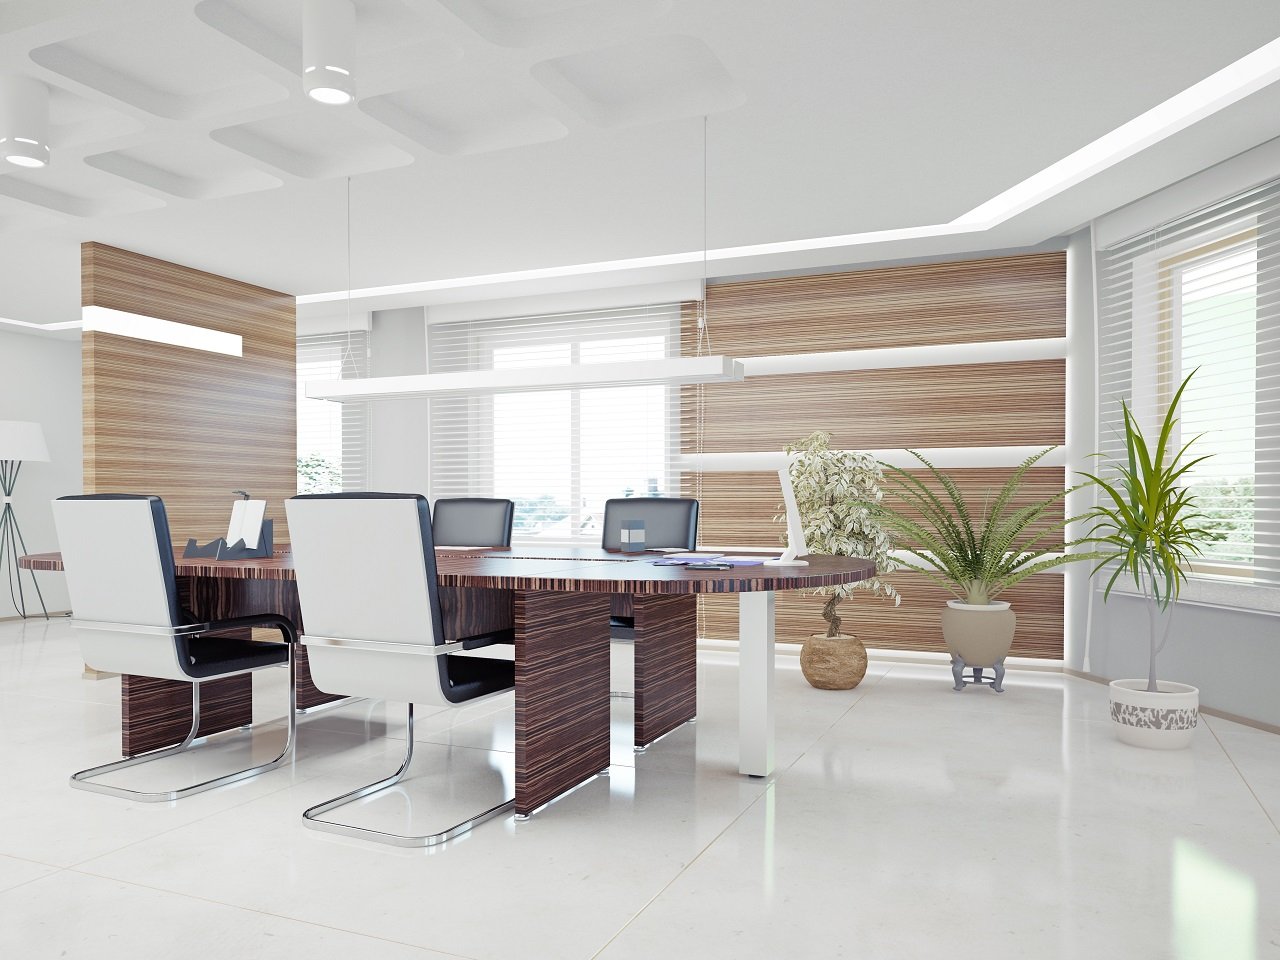 modern office interior. design concept ; Shutterstock ID 179555360